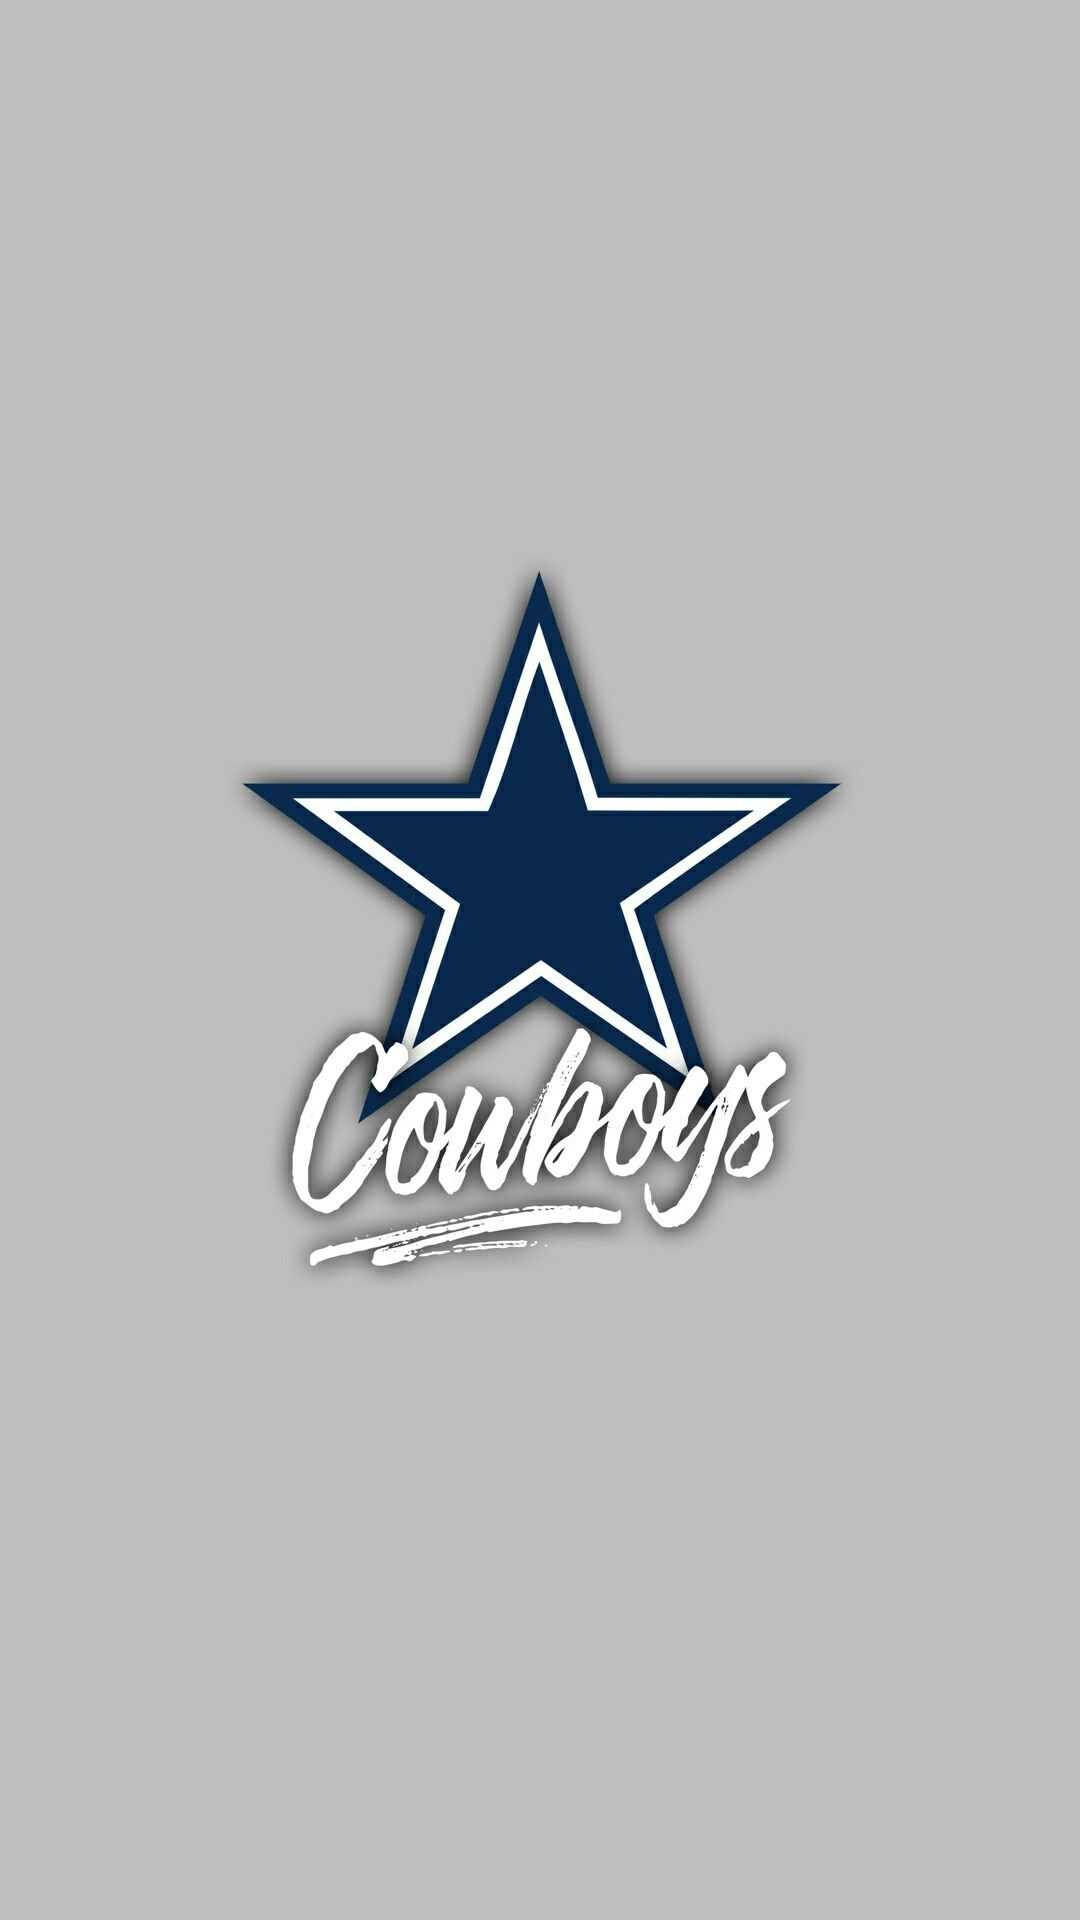 Dallas Cowboys Light Gray Background Wallpaper